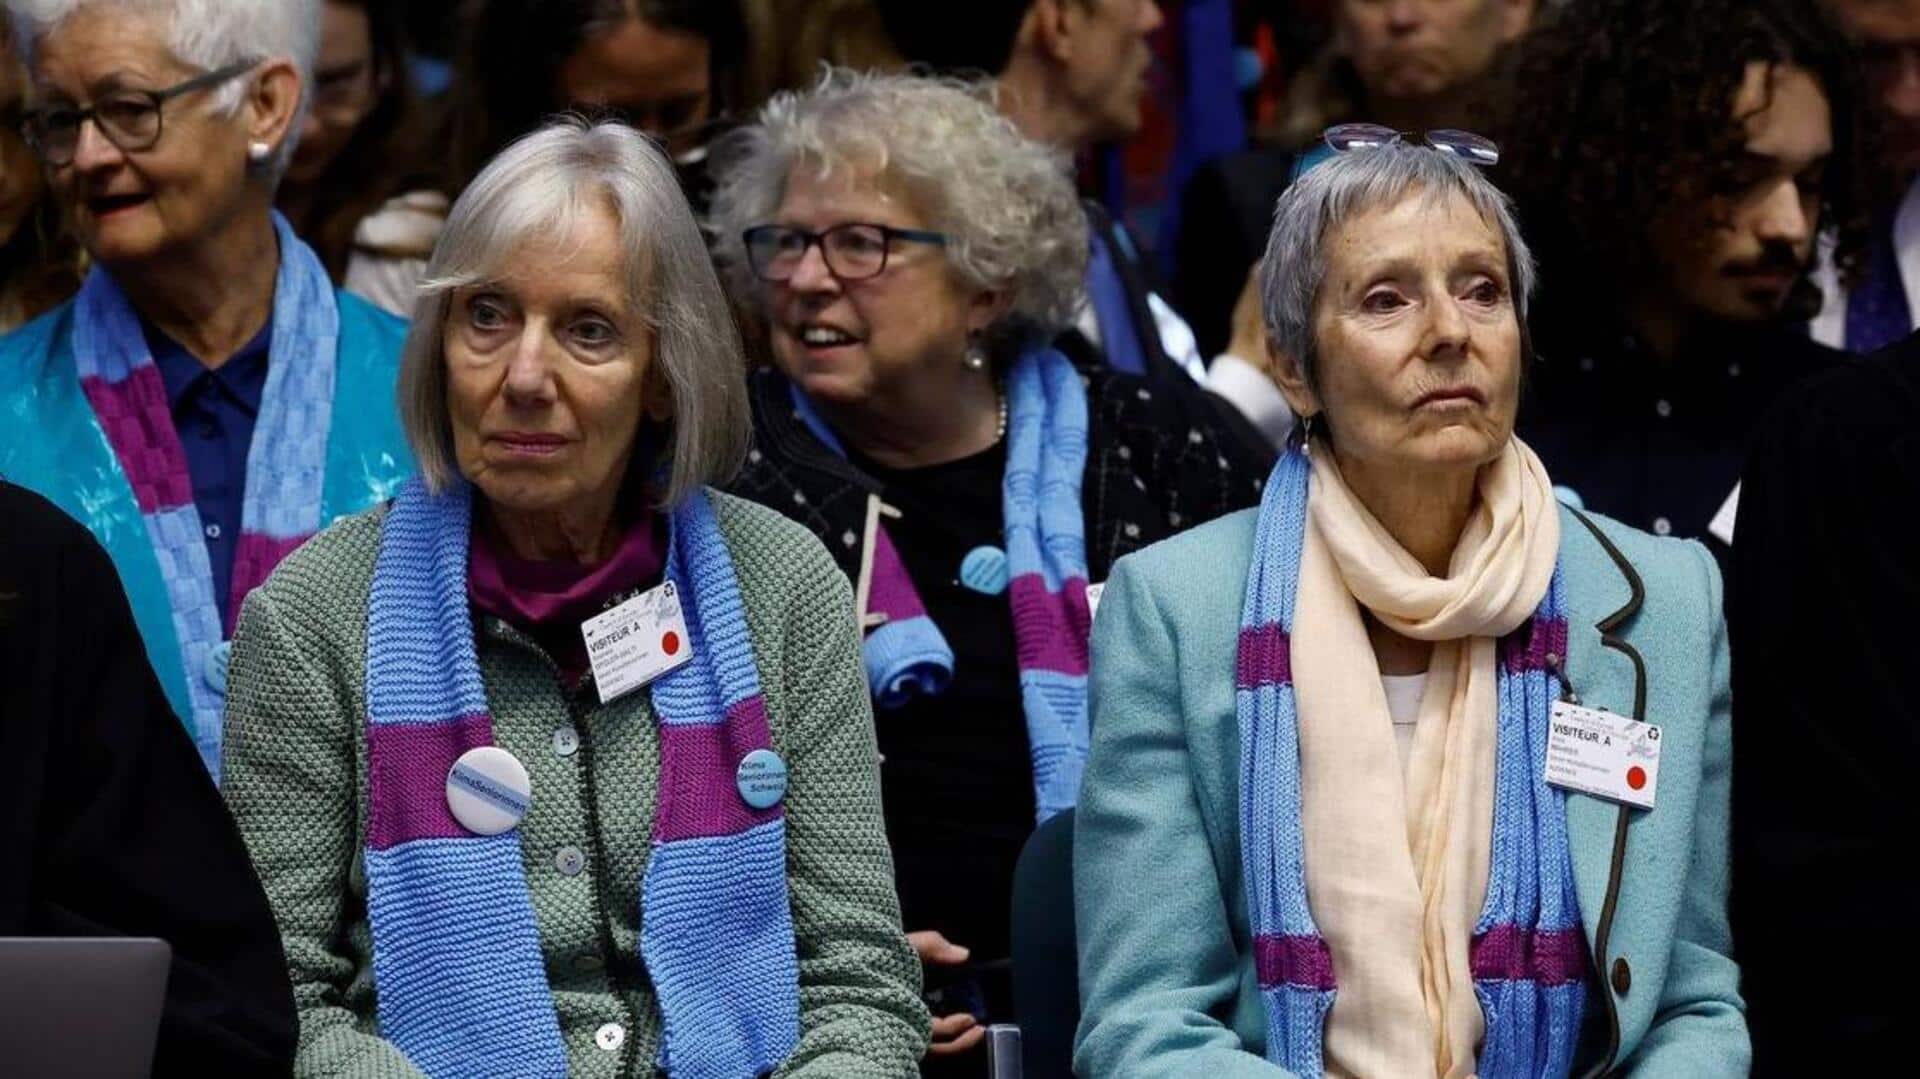 Who are elderly Swiss women who won landmark climate case